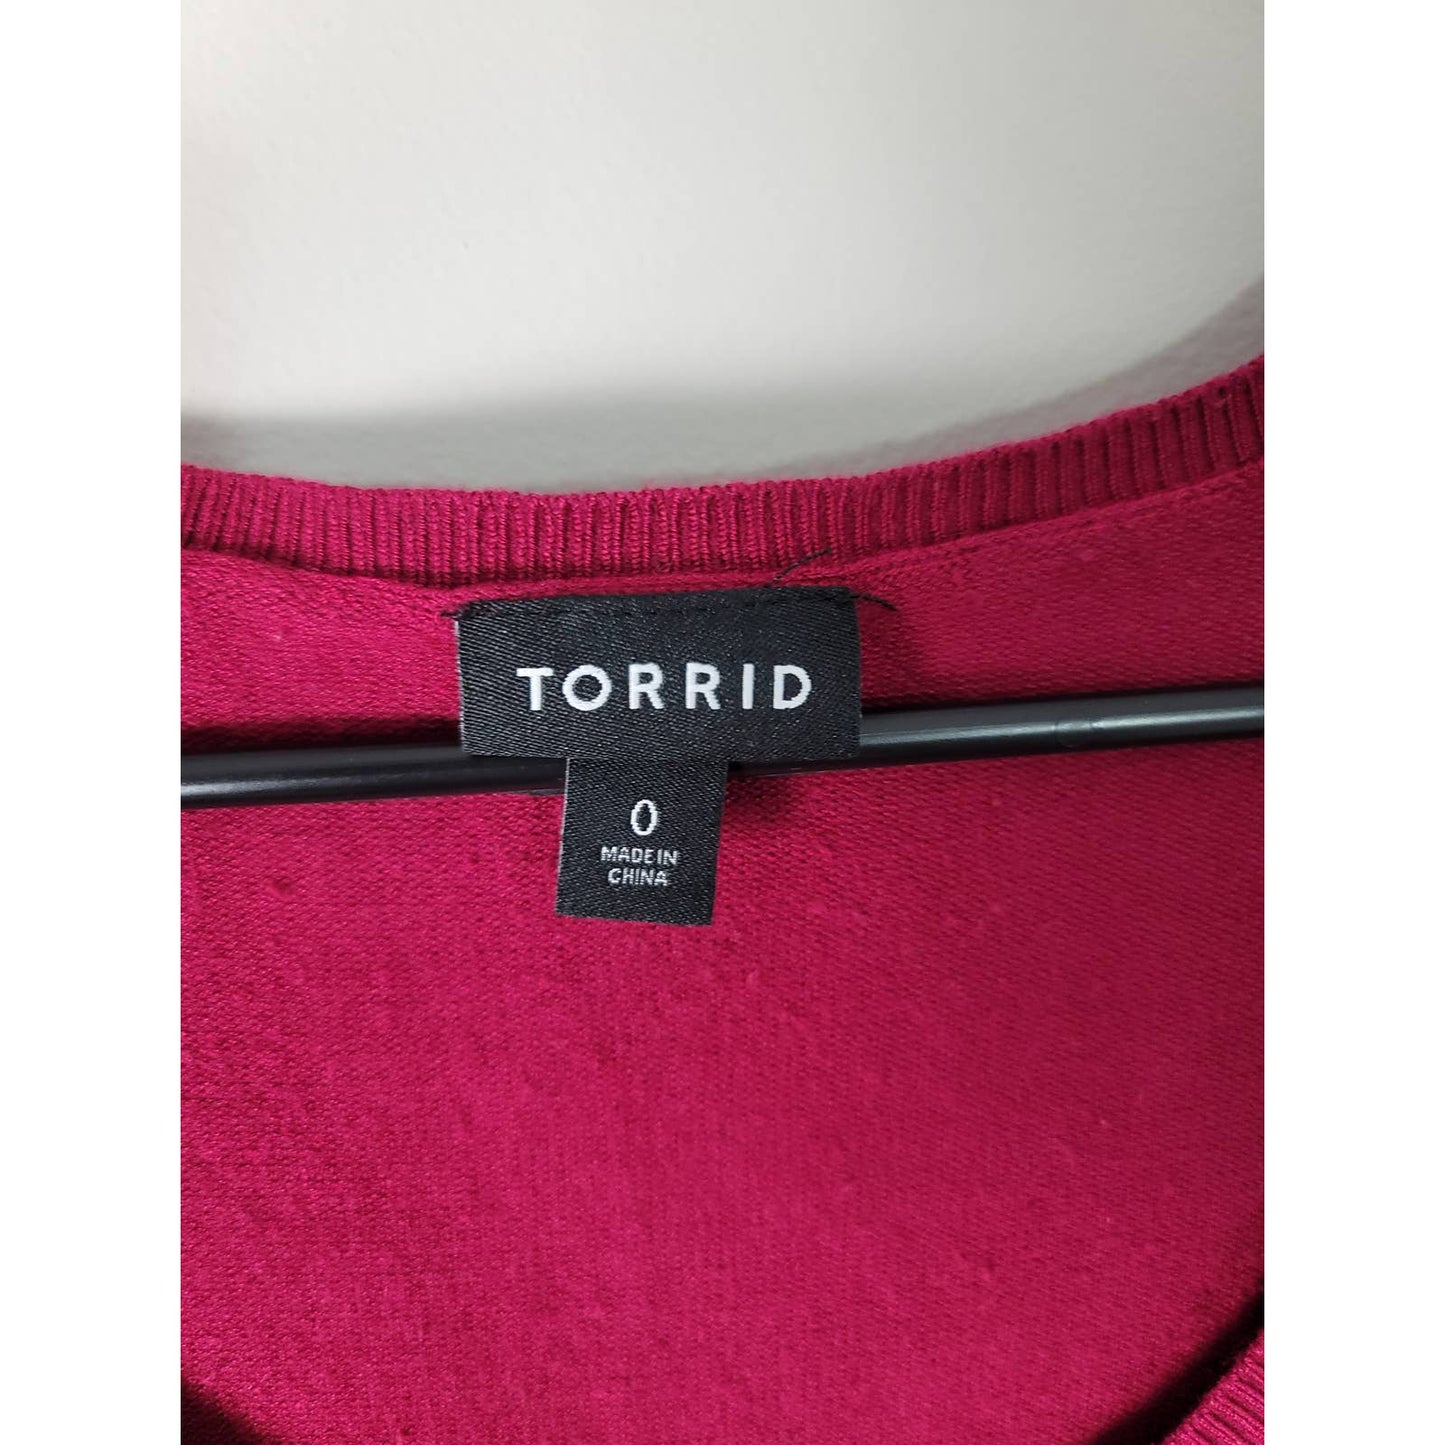 Torrid Babydoll Top Dark Pink Short Sleeve Knit Plus Size 0/0X